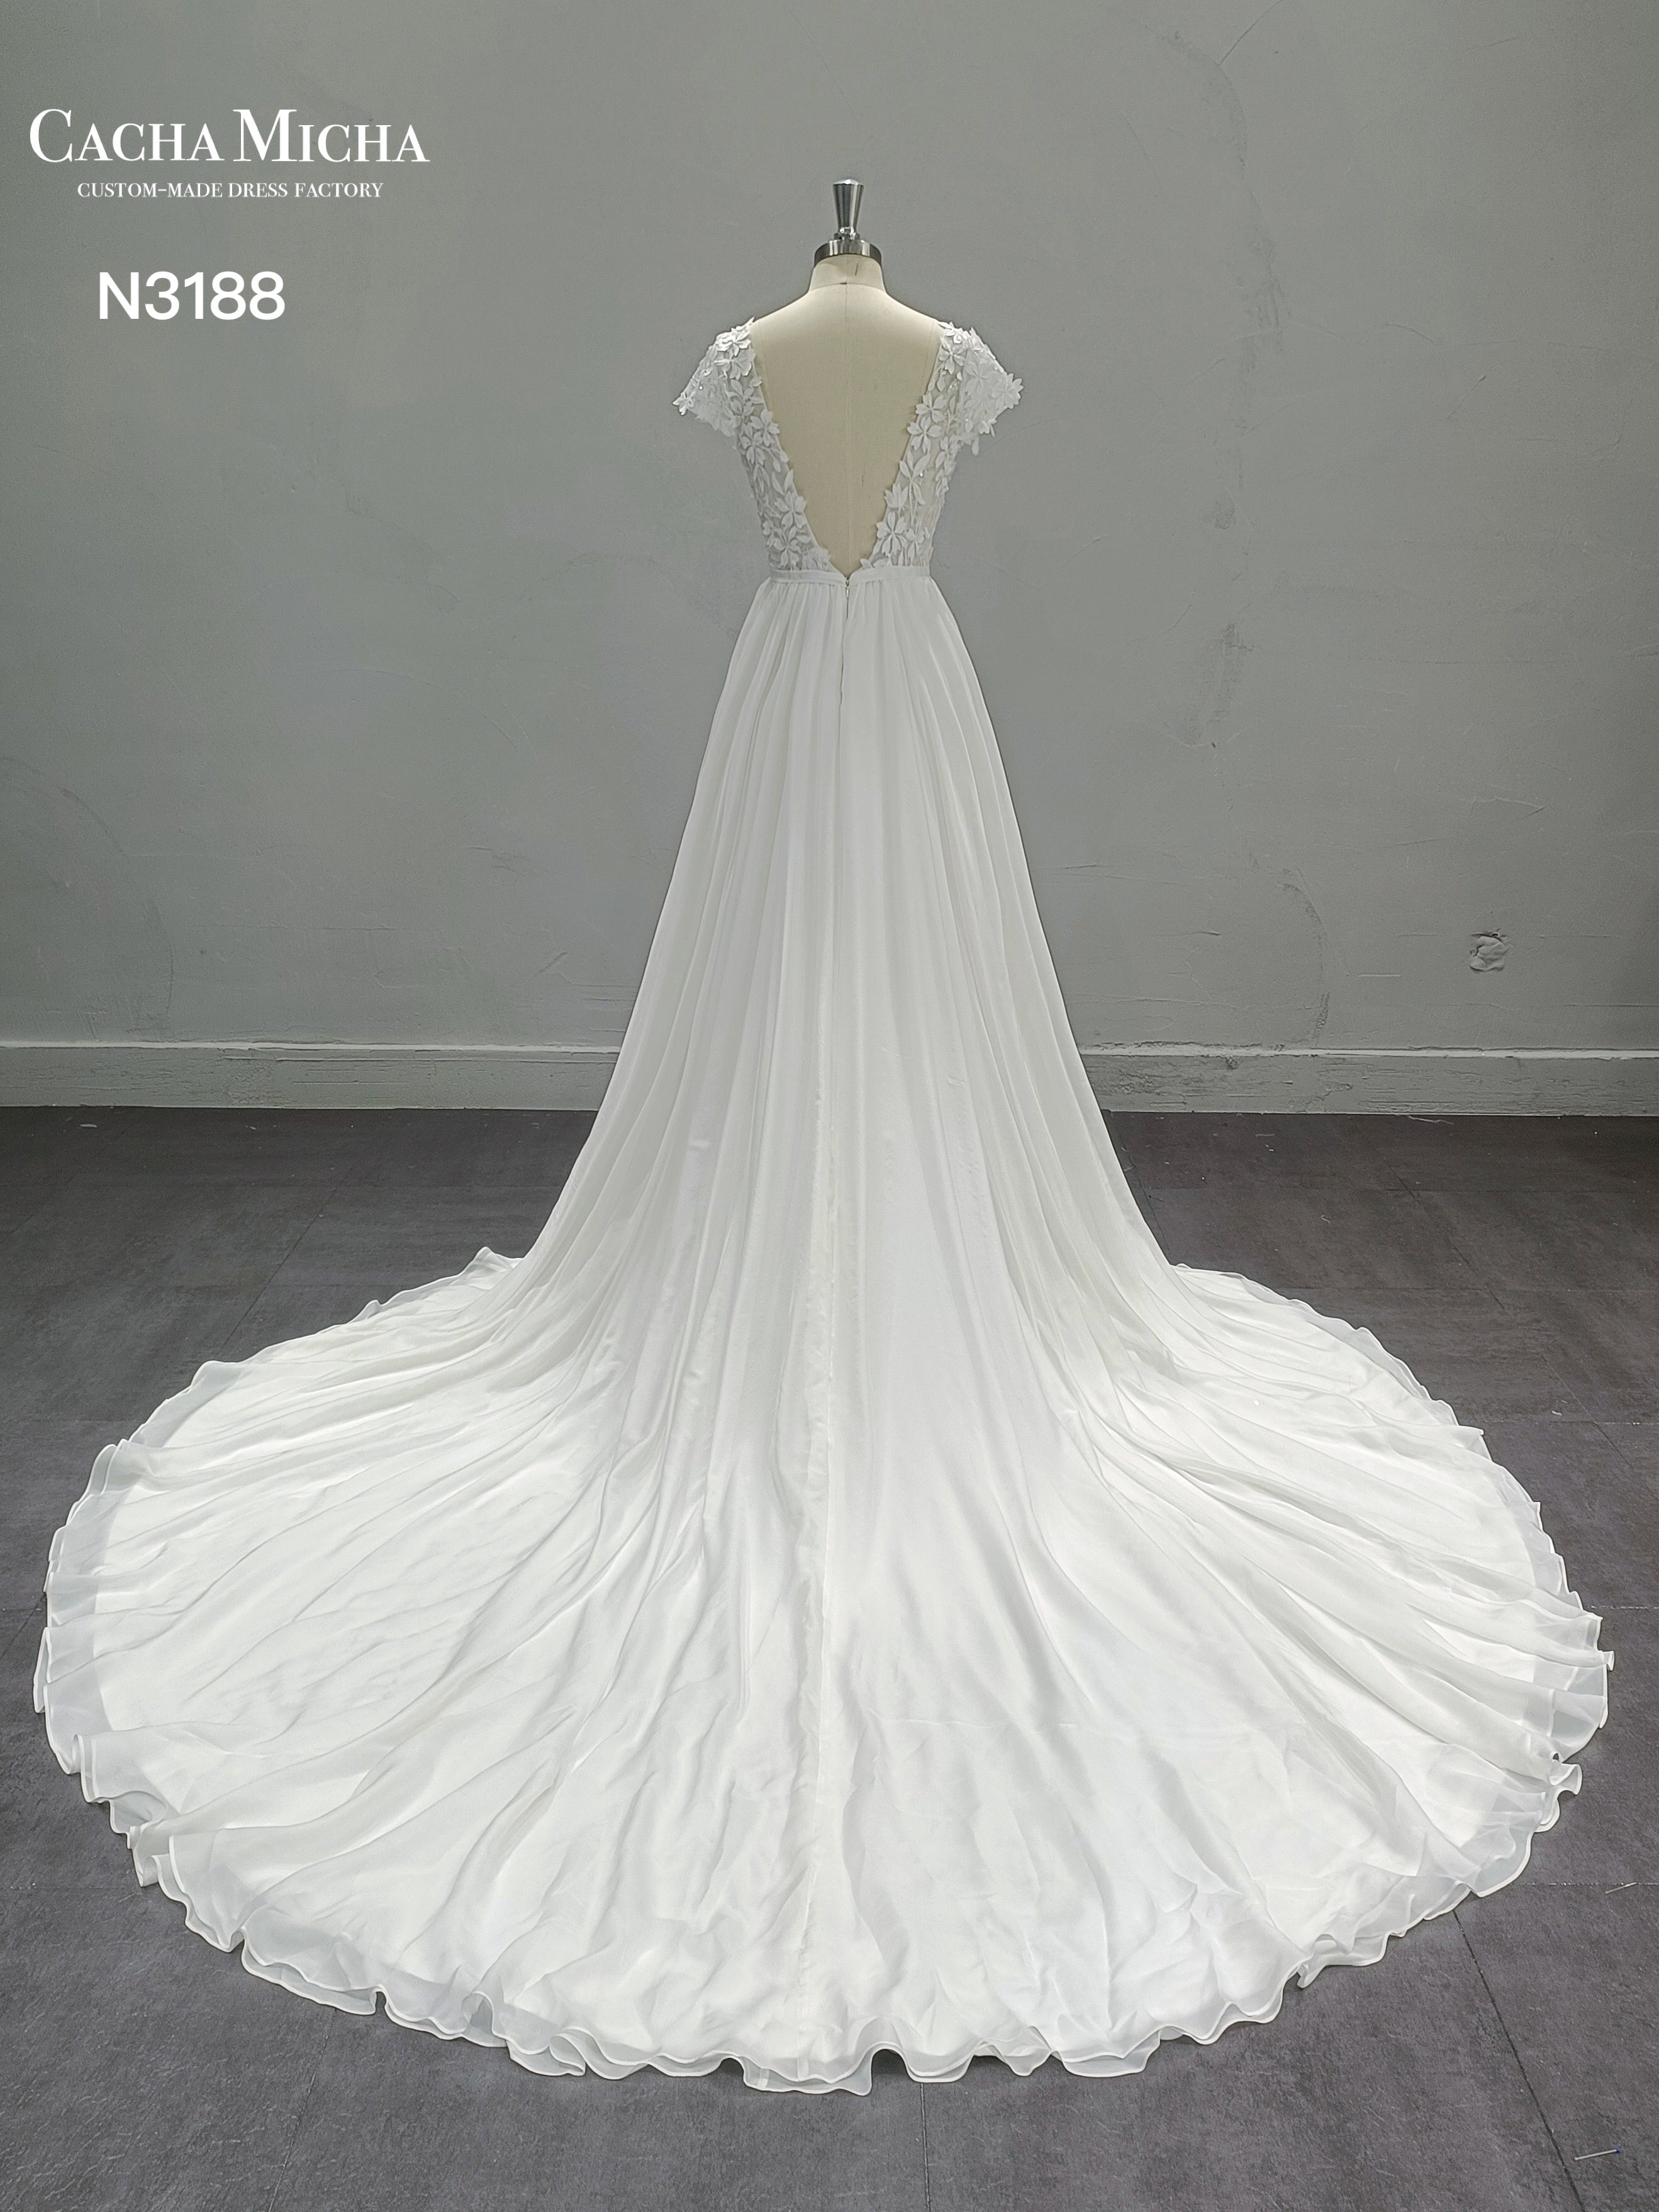 3D Lace Top Chiffon Skirt Wedding Dress N3188